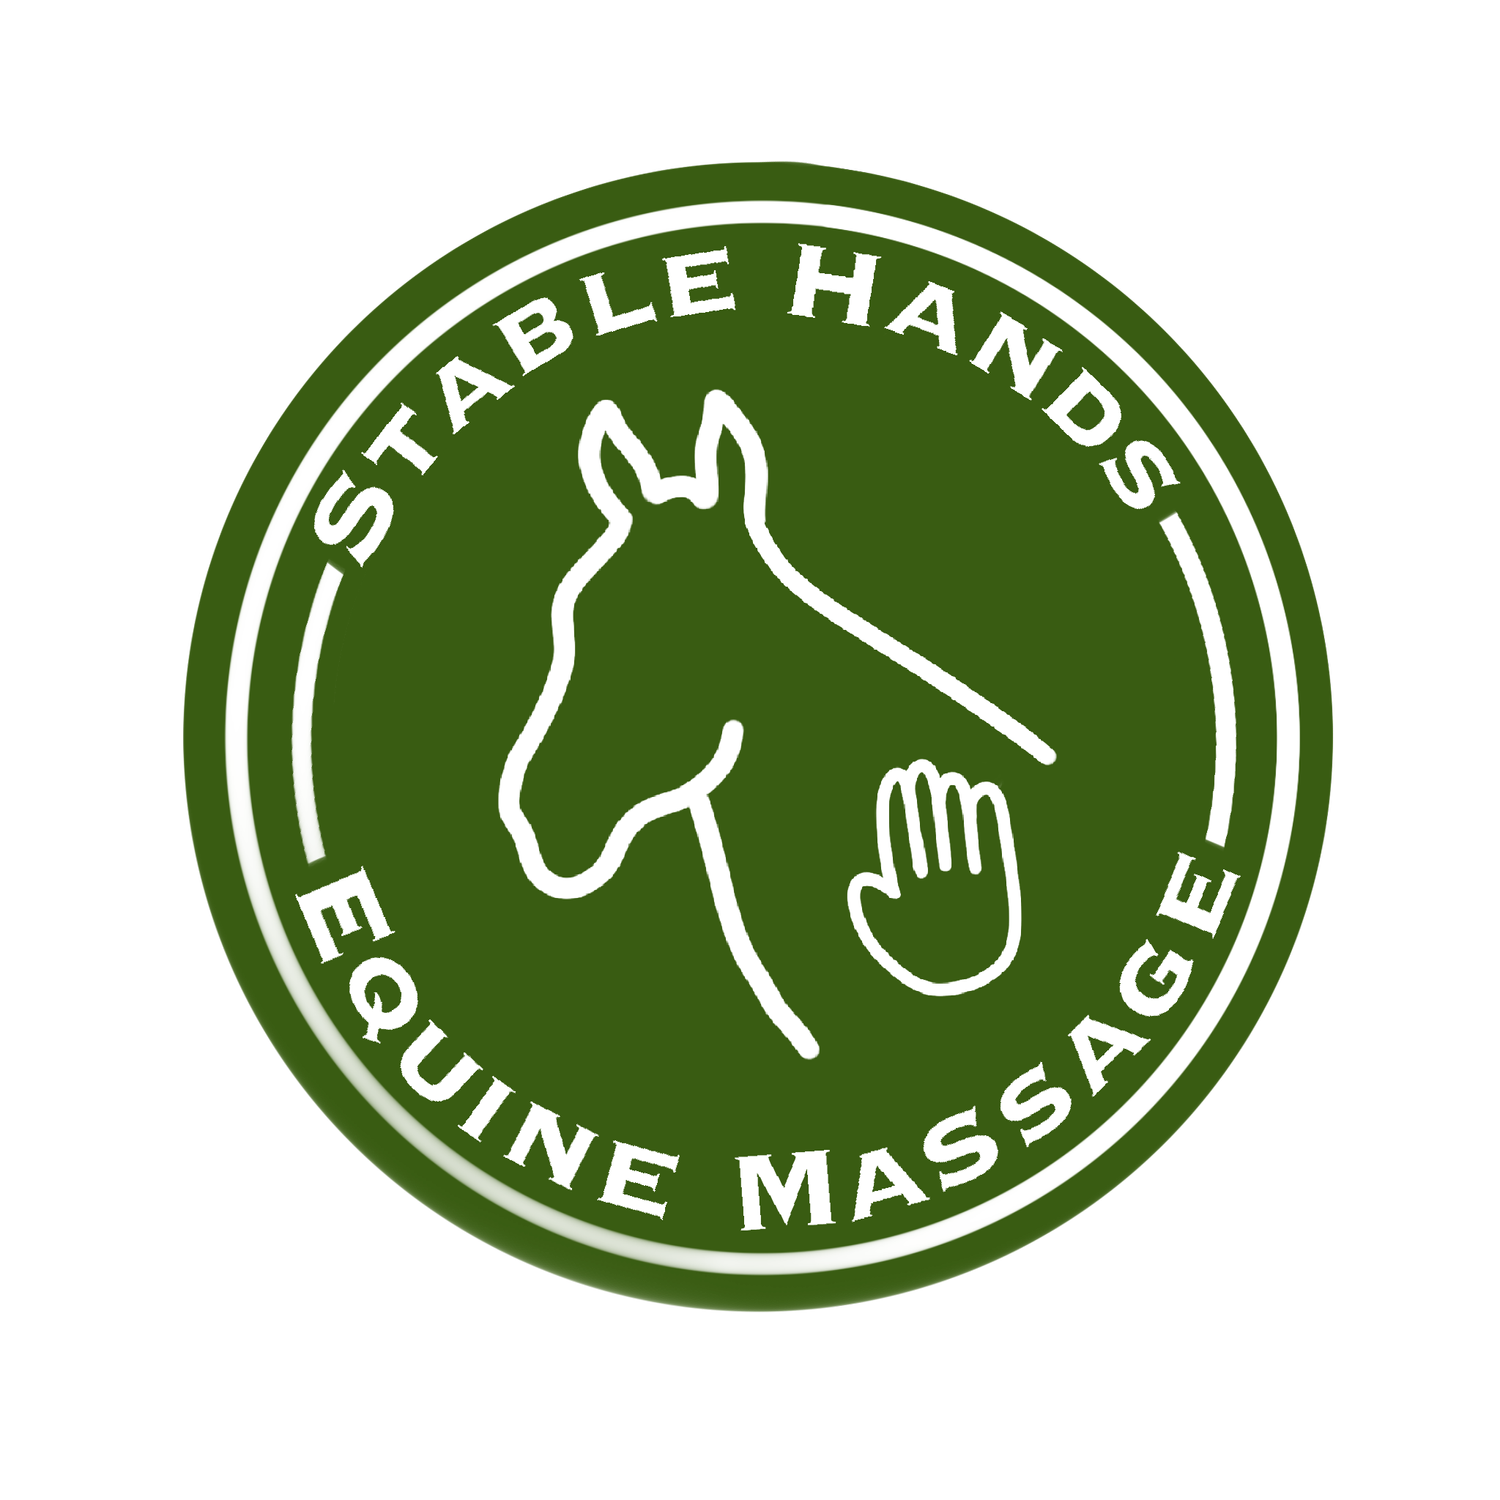 Stable Hands Equine Massage